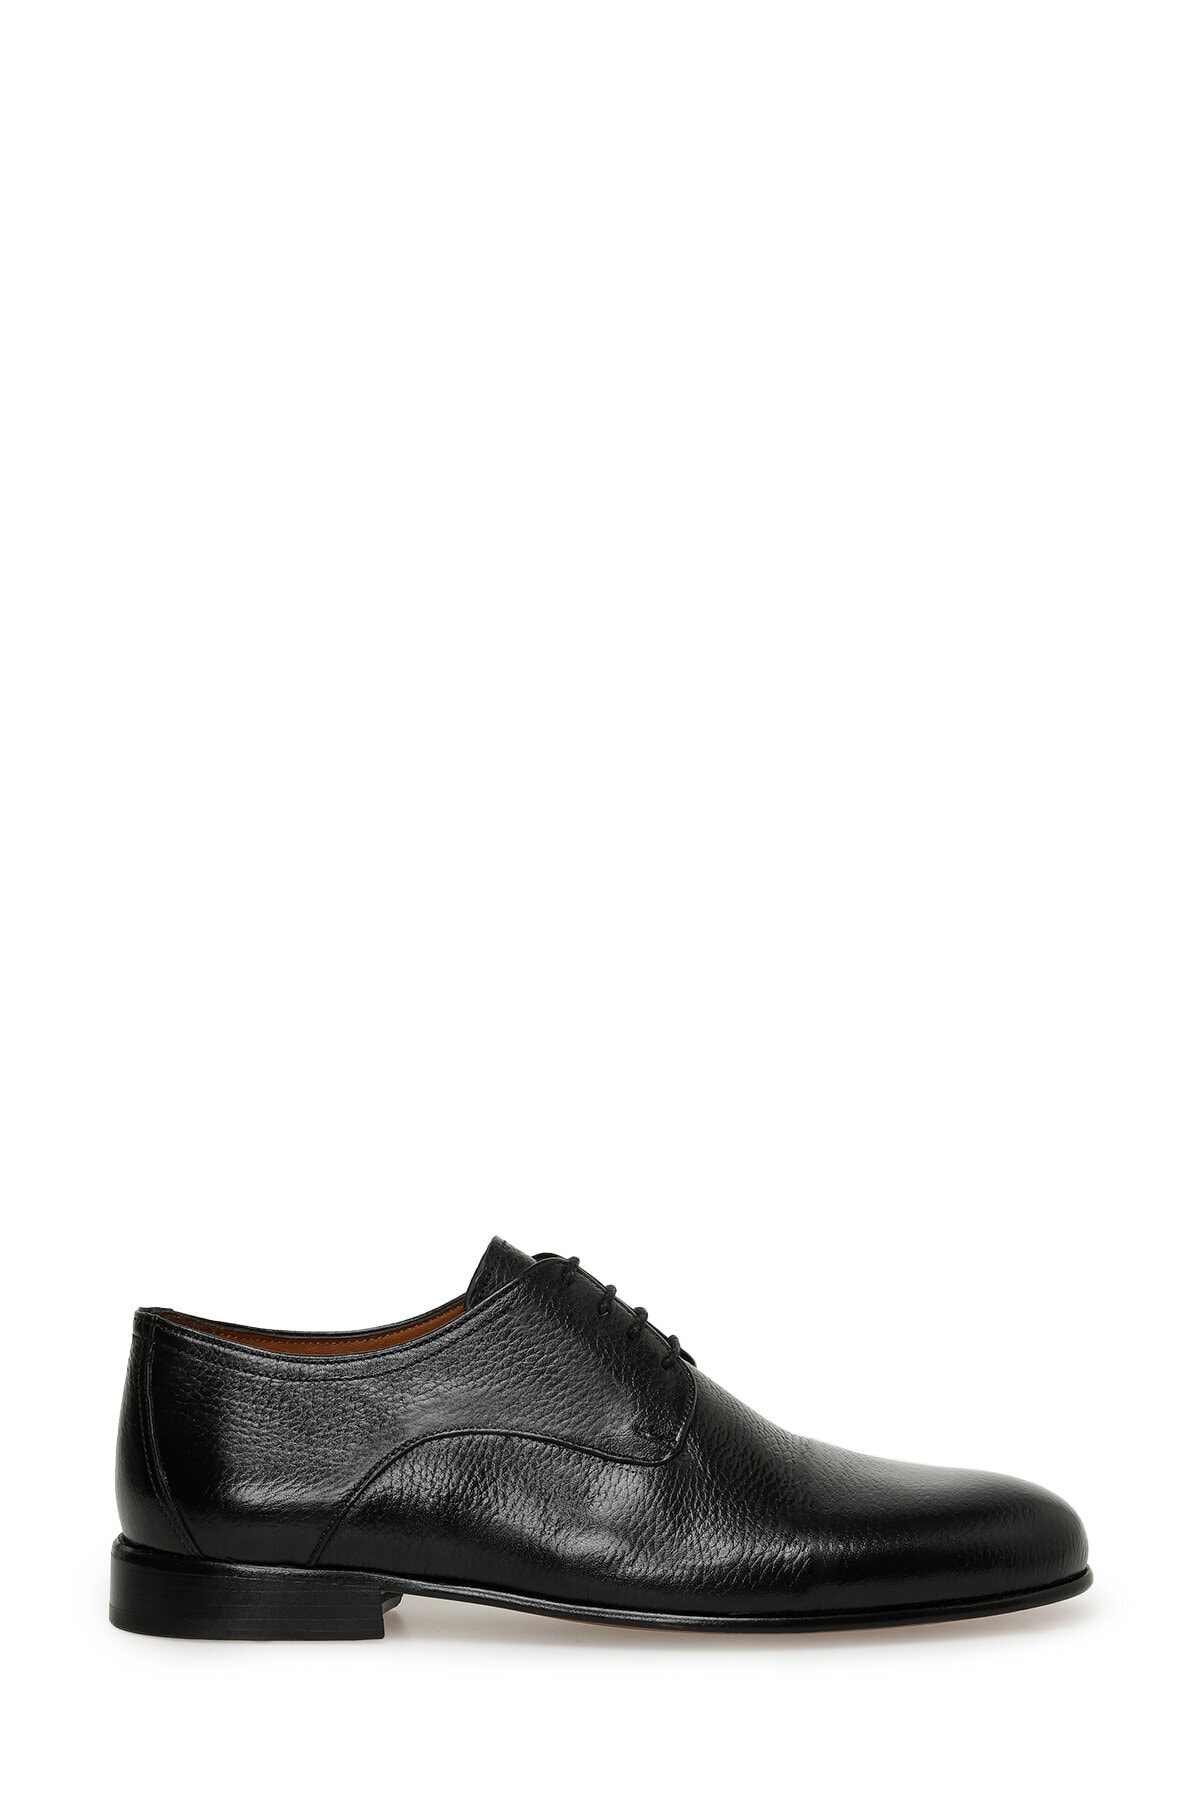 İnci Pold 3fx Black Men's Classic Shoe